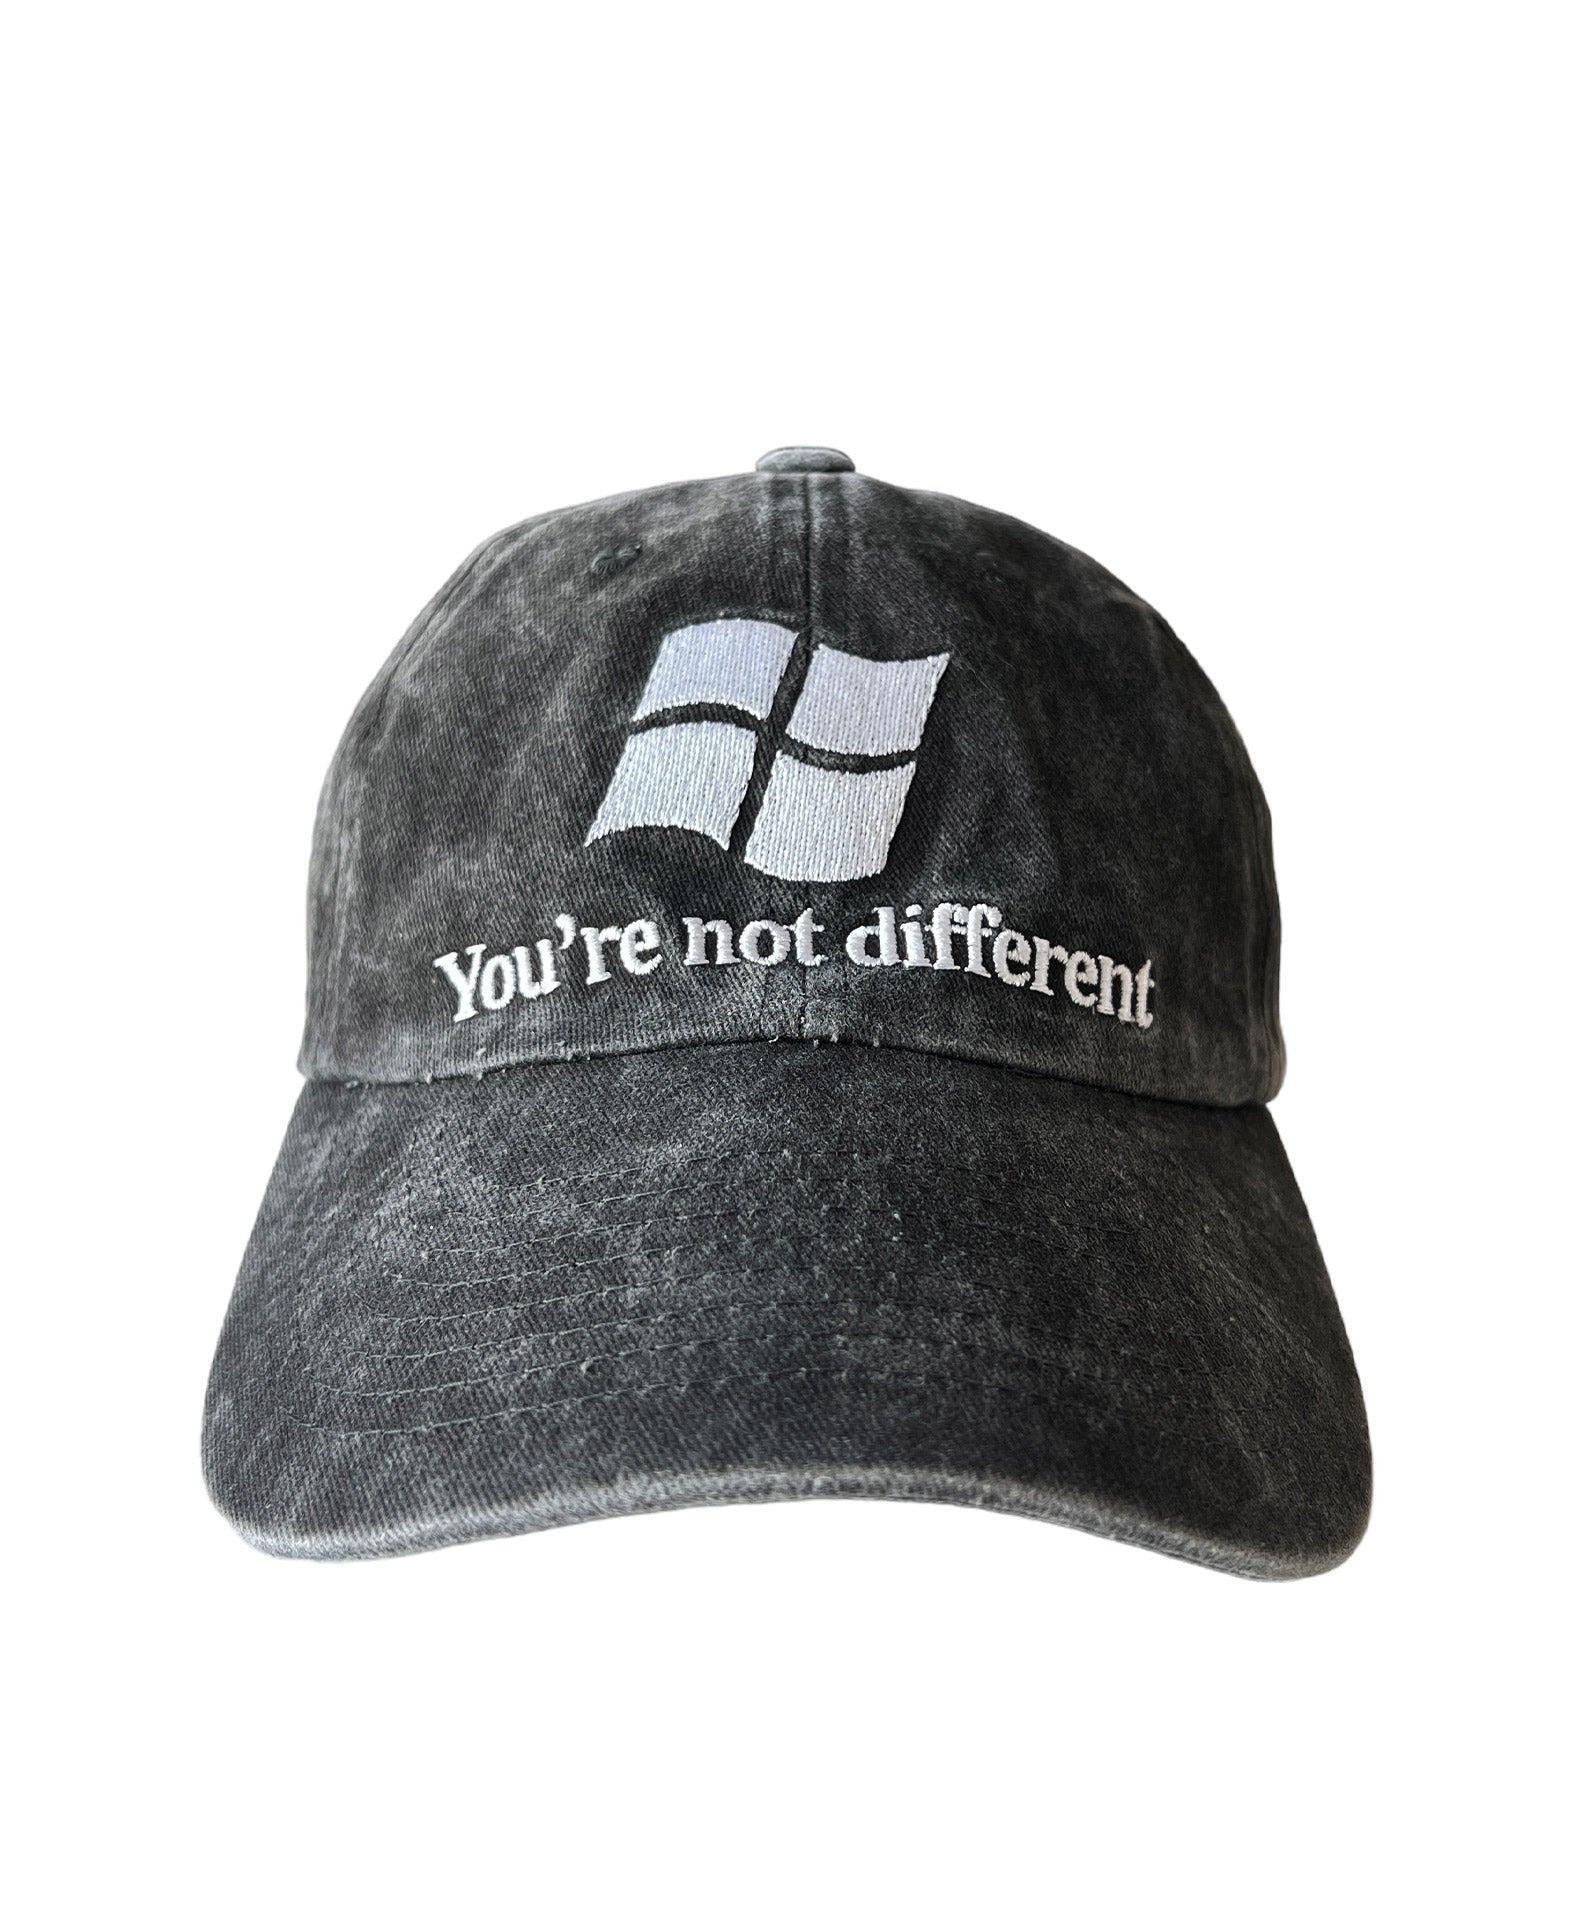 Not Different Hat - Black